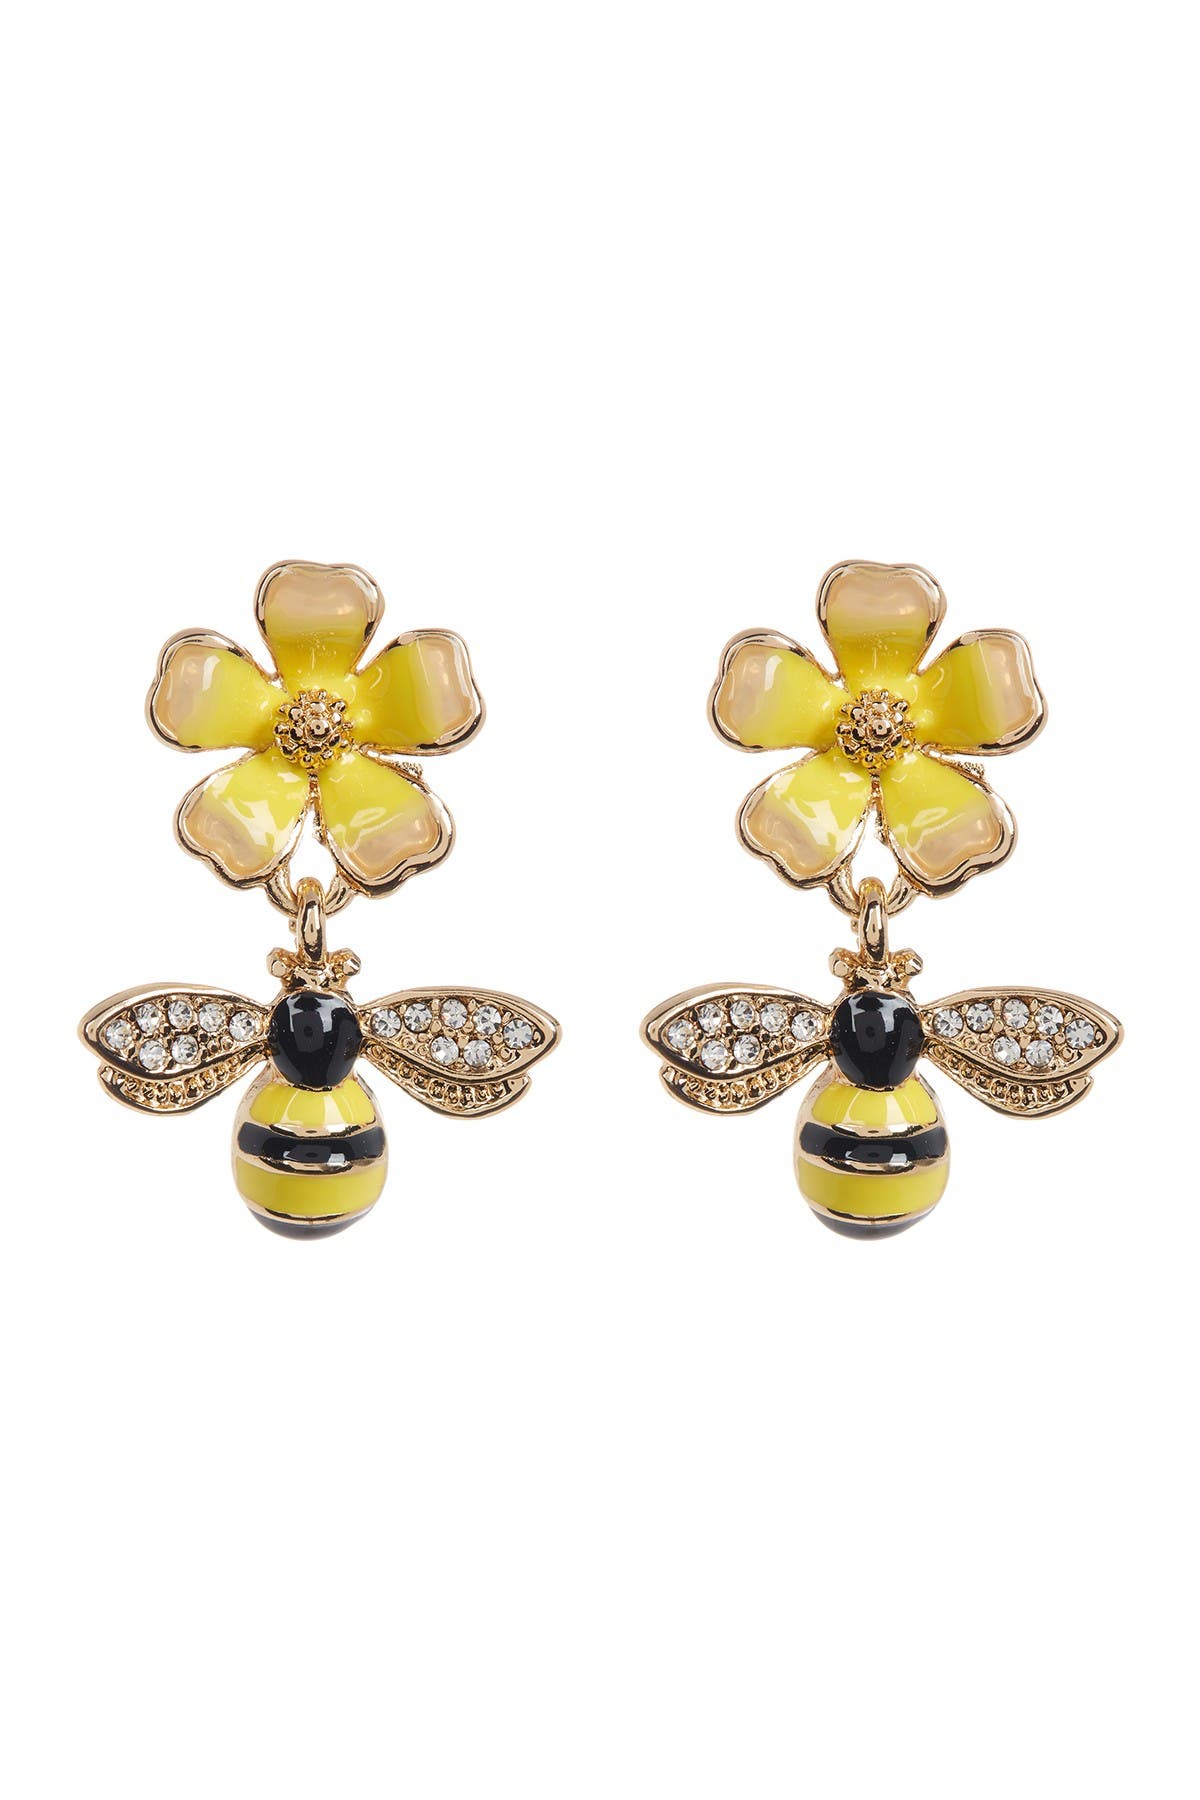 Bee earrings mid length gold plate yellow enamel crystal in gift box 